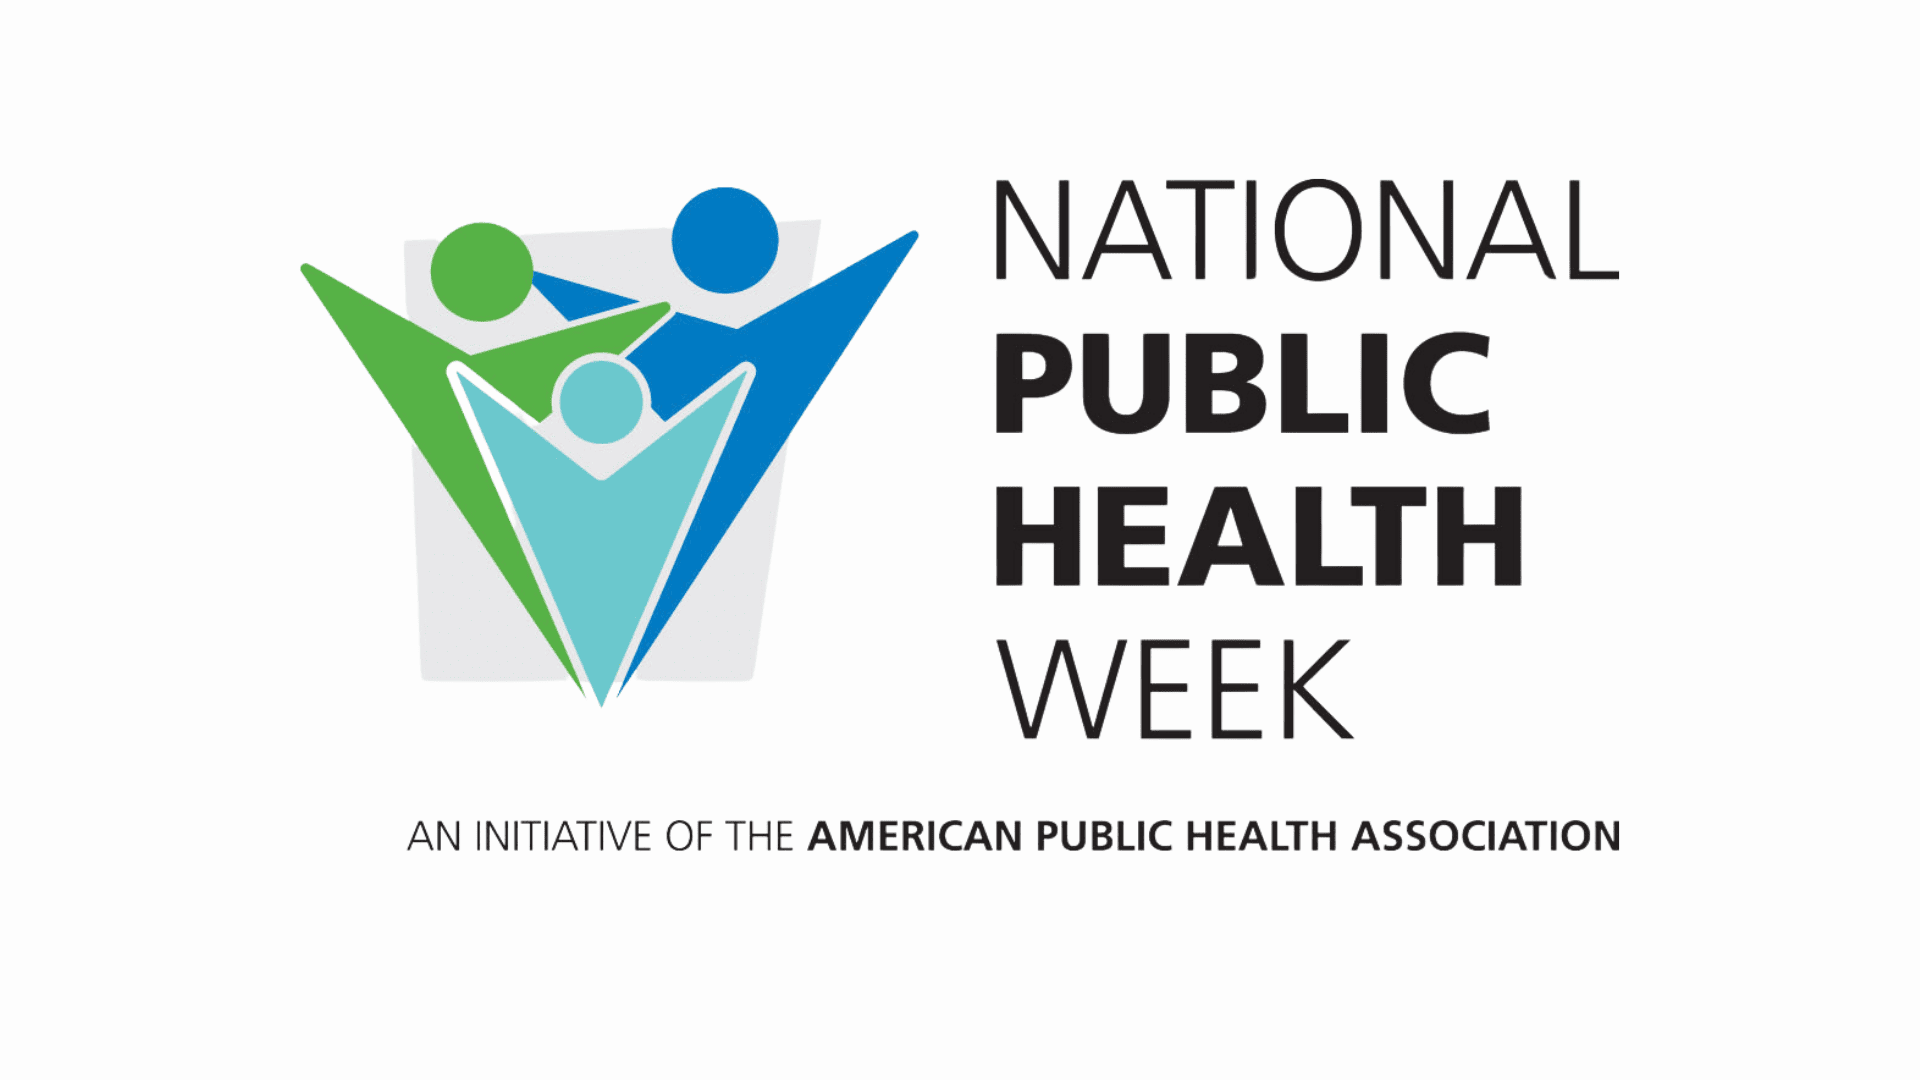 image of national public health week logo